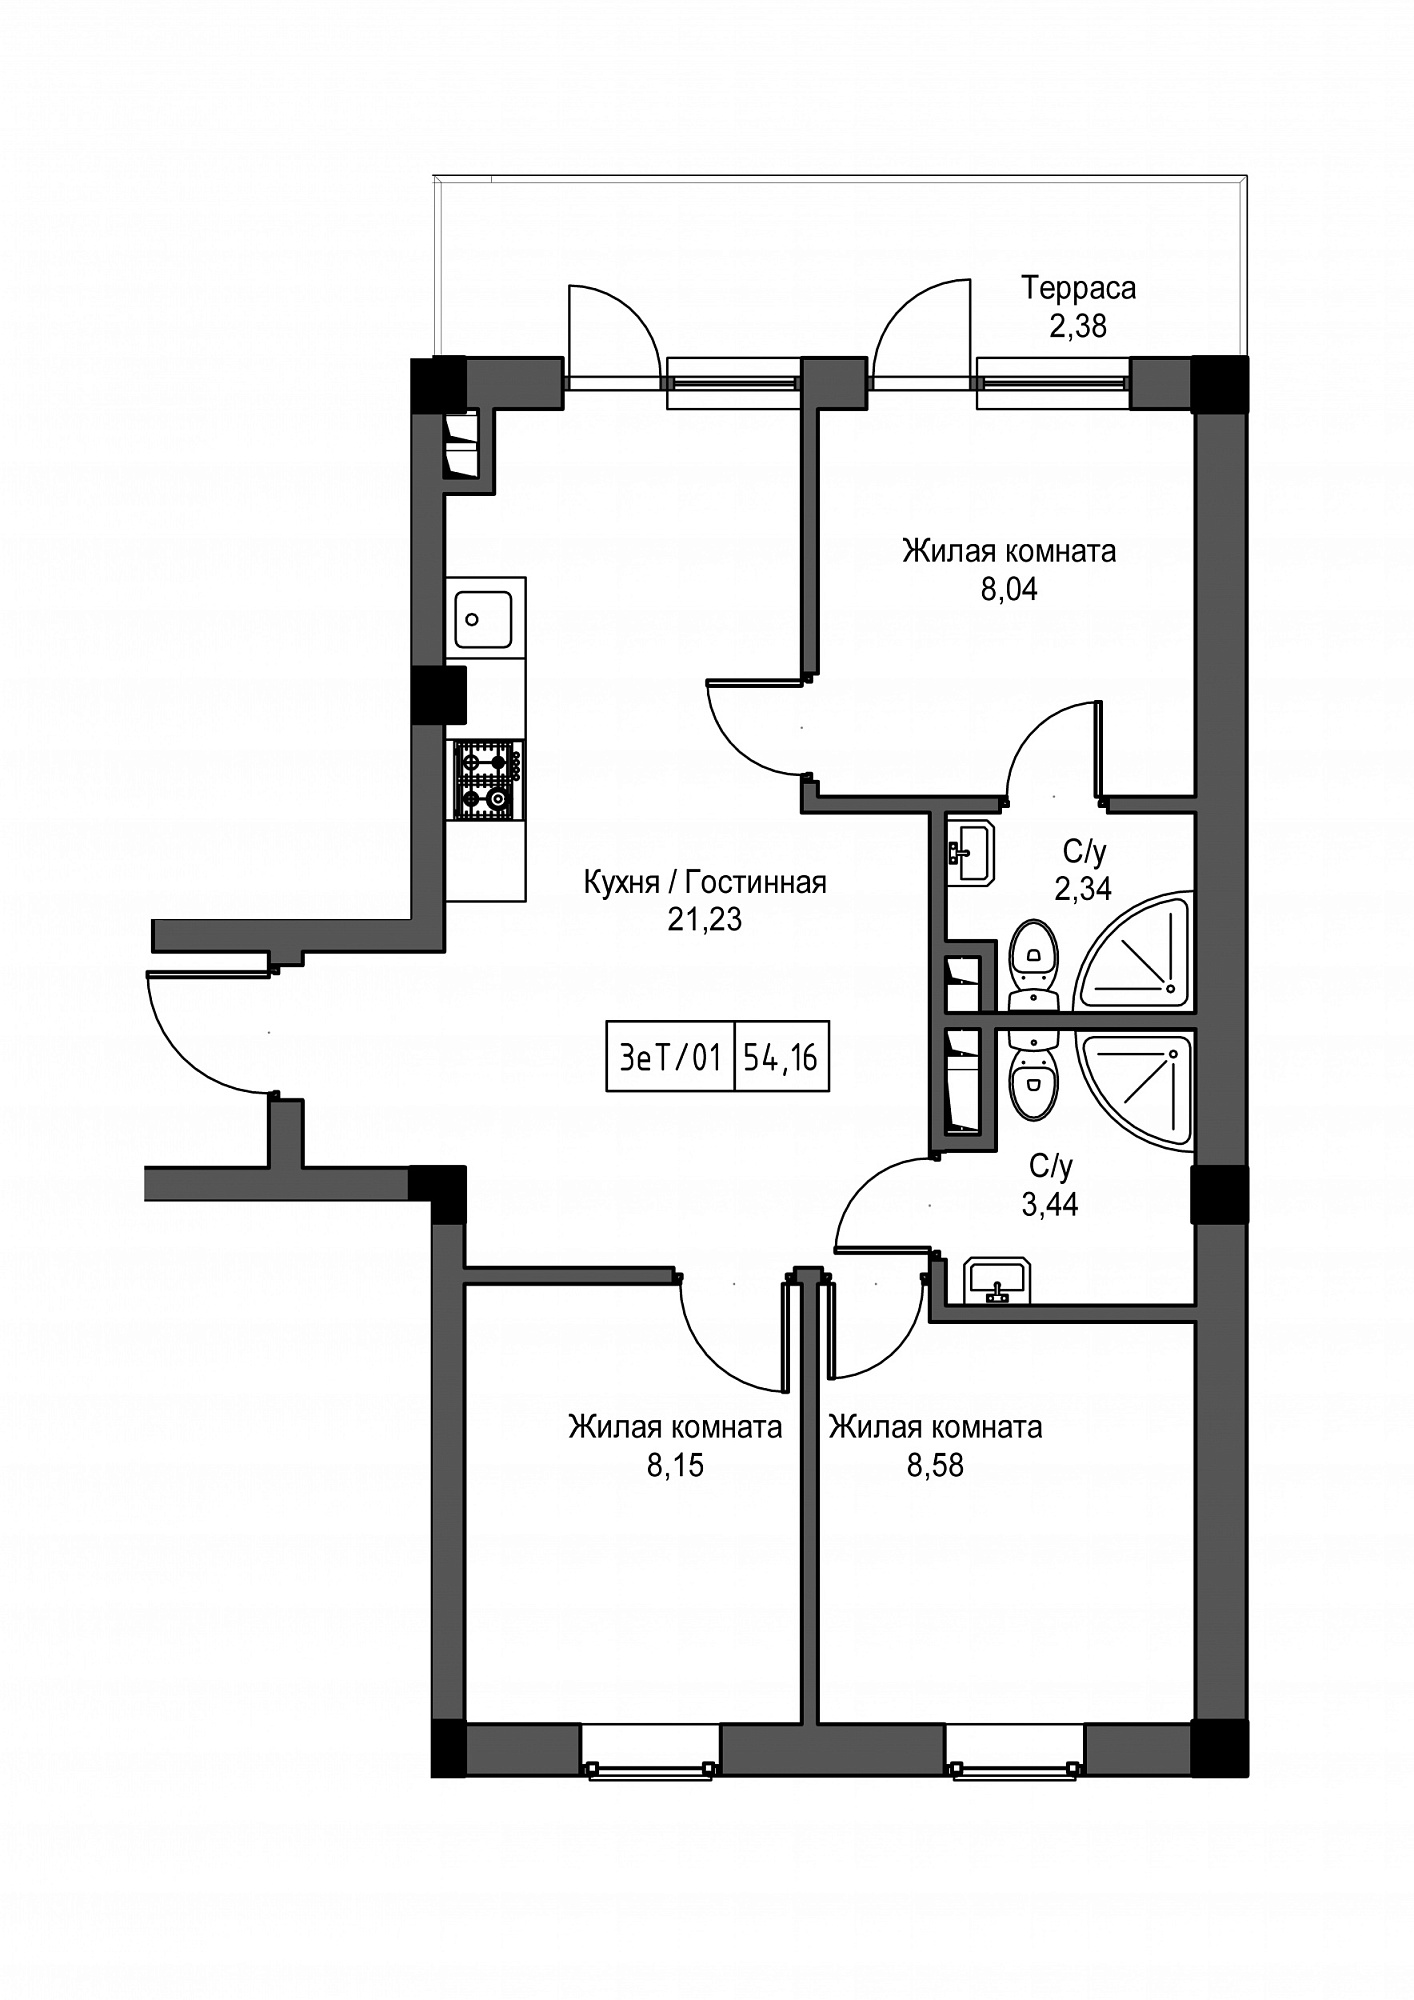 Планування 3-к квартира площею 54.16м2, UM-002-02/0103.